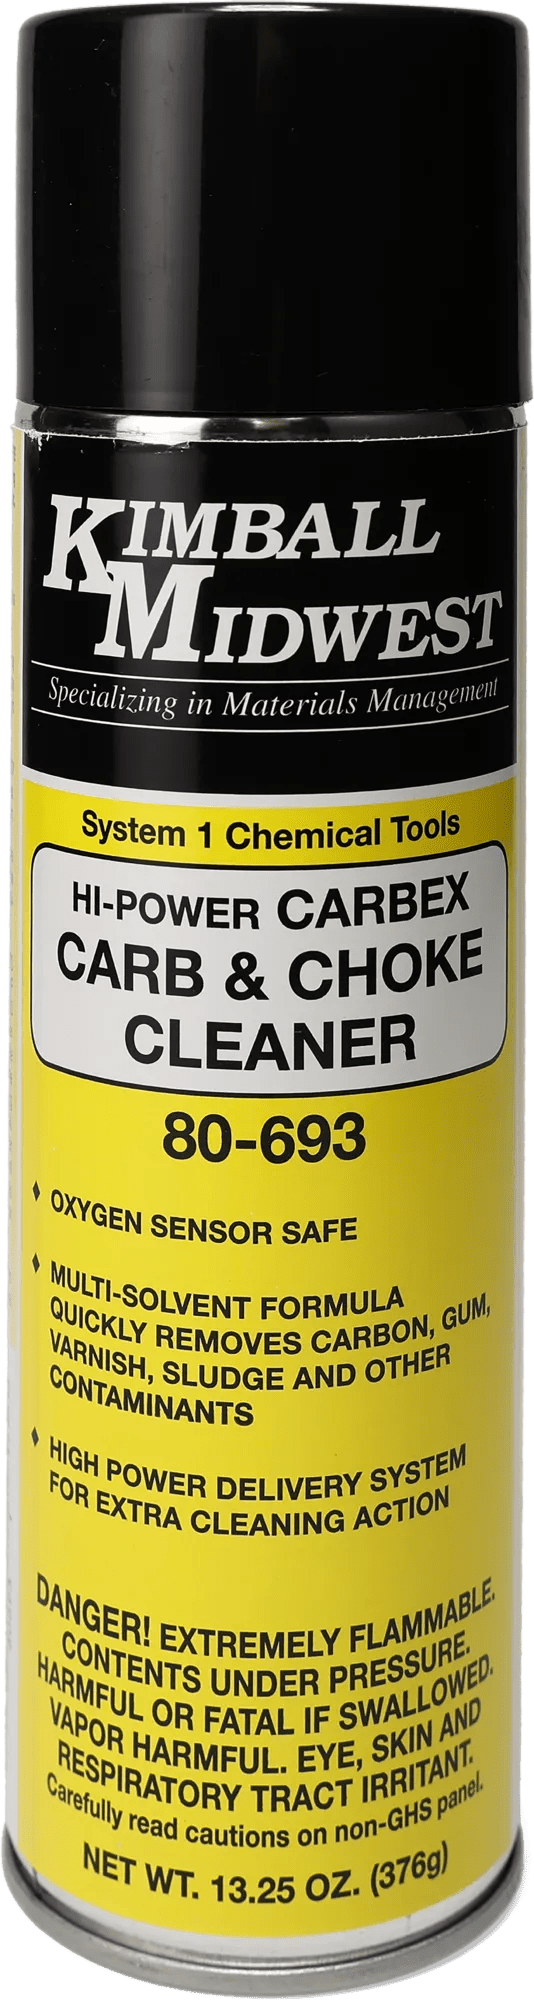 Carbex Carb & Choke Cleaner